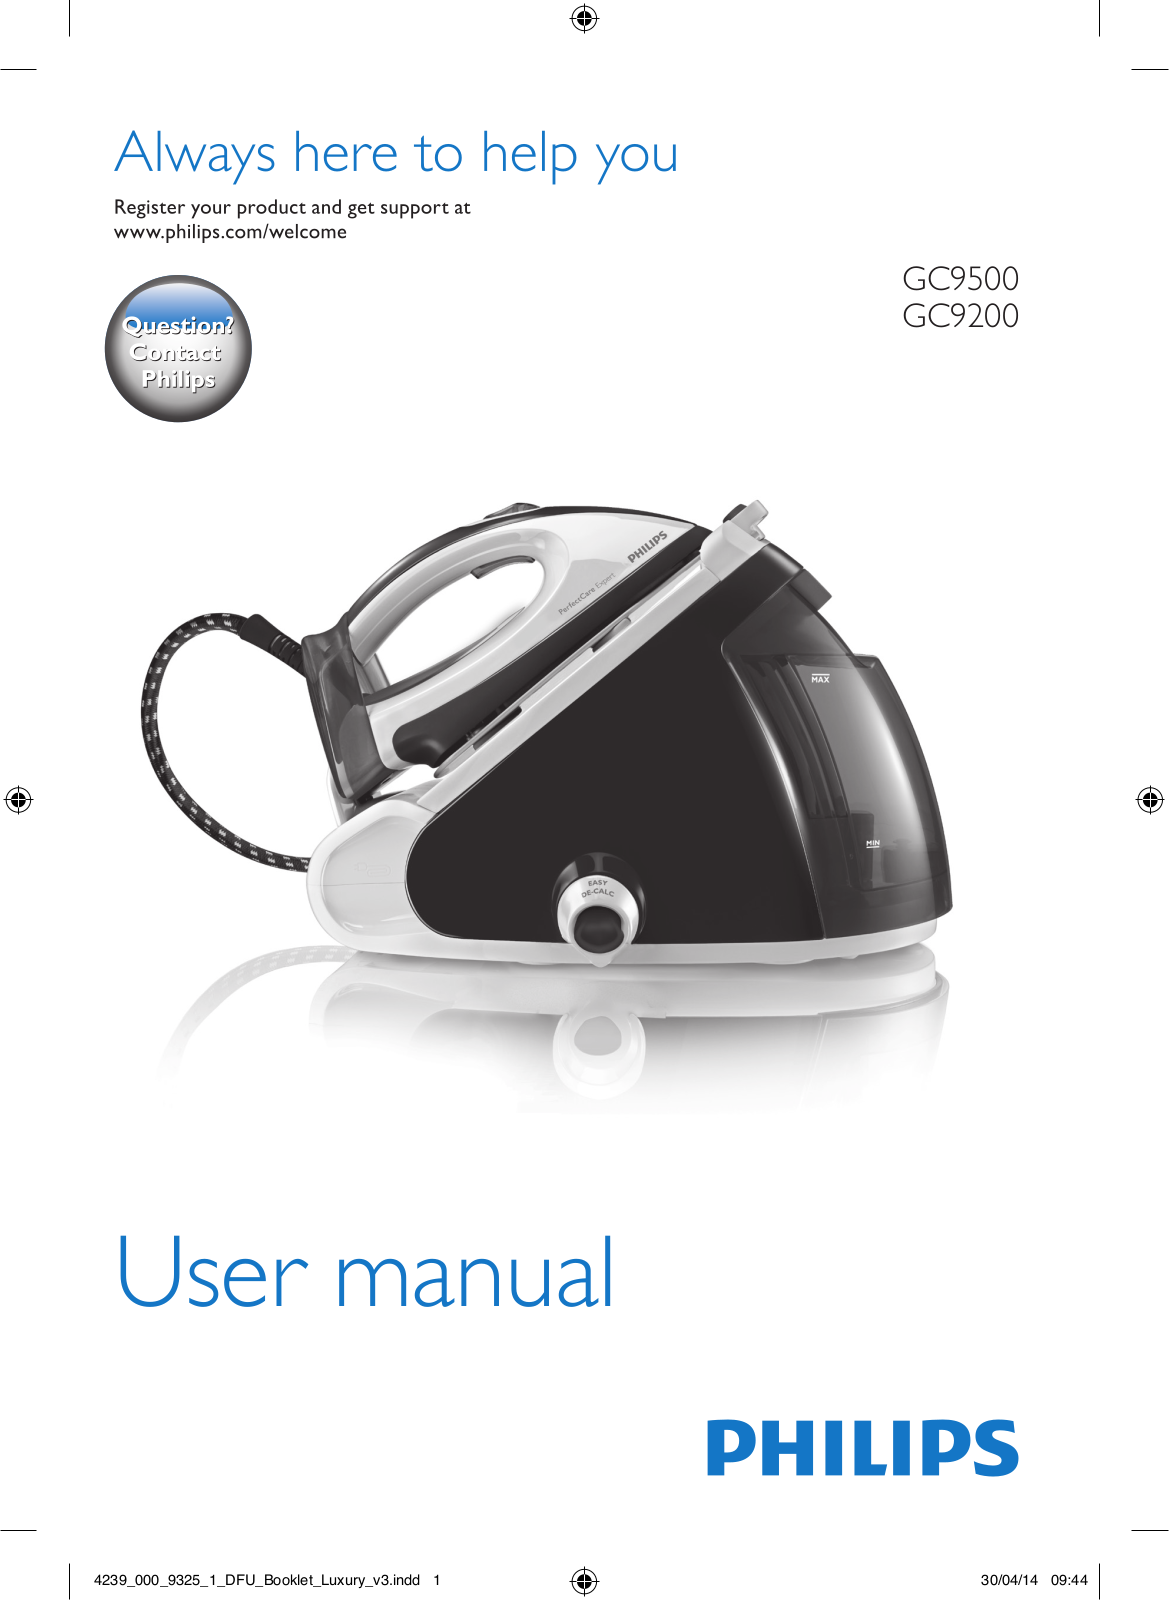 Philips GC9520 User Manual